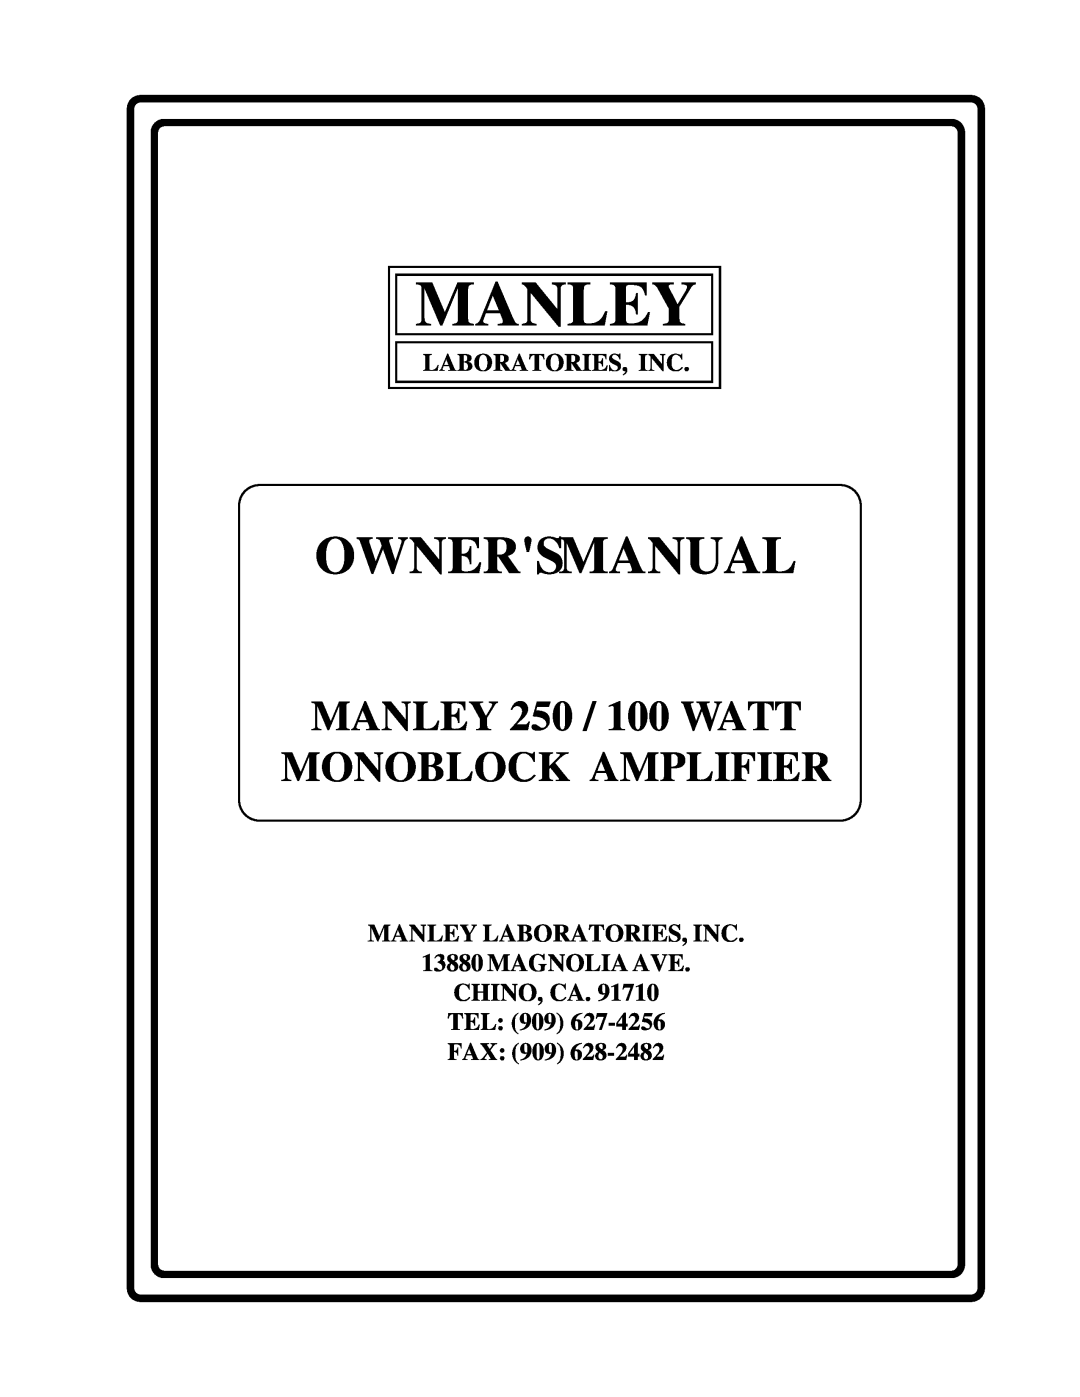 Manley Labs owner manual Manley, Ownersmanual, MANLEY 250 / 100 WATT MONOBLOCK AMPLIFIER, Laboratories, Inc 